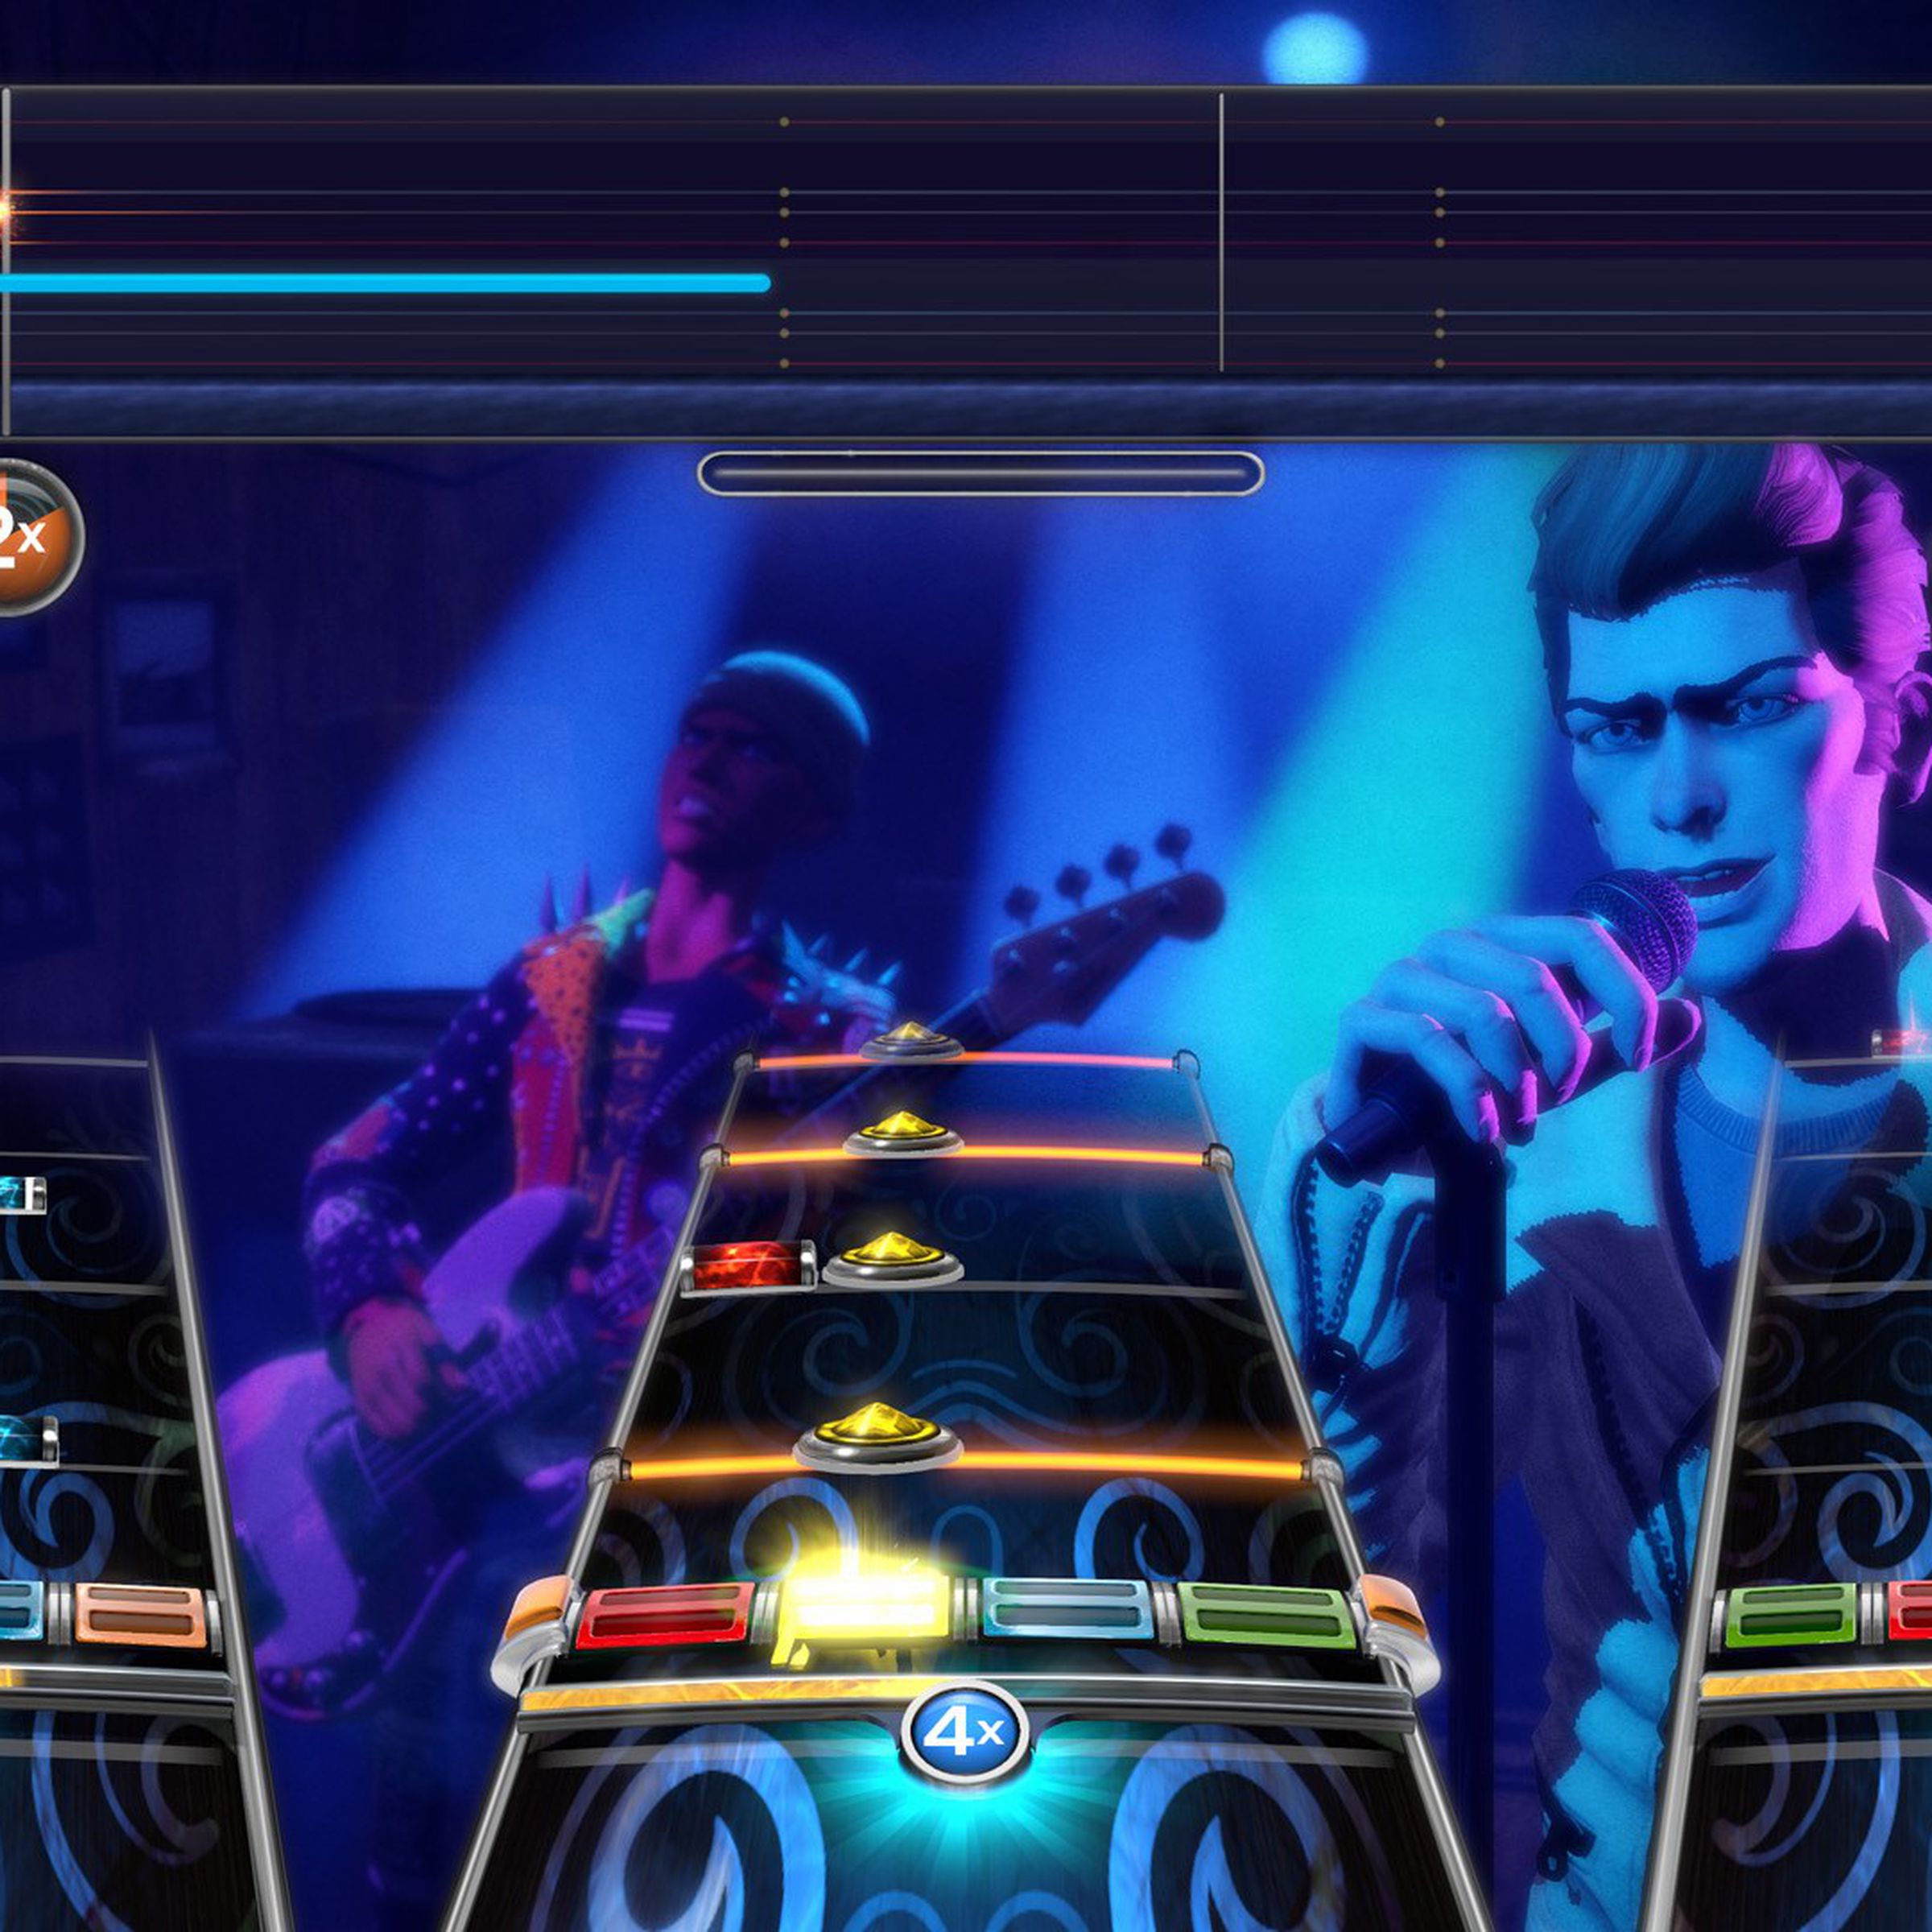 A screenshot from Rock Band 4.